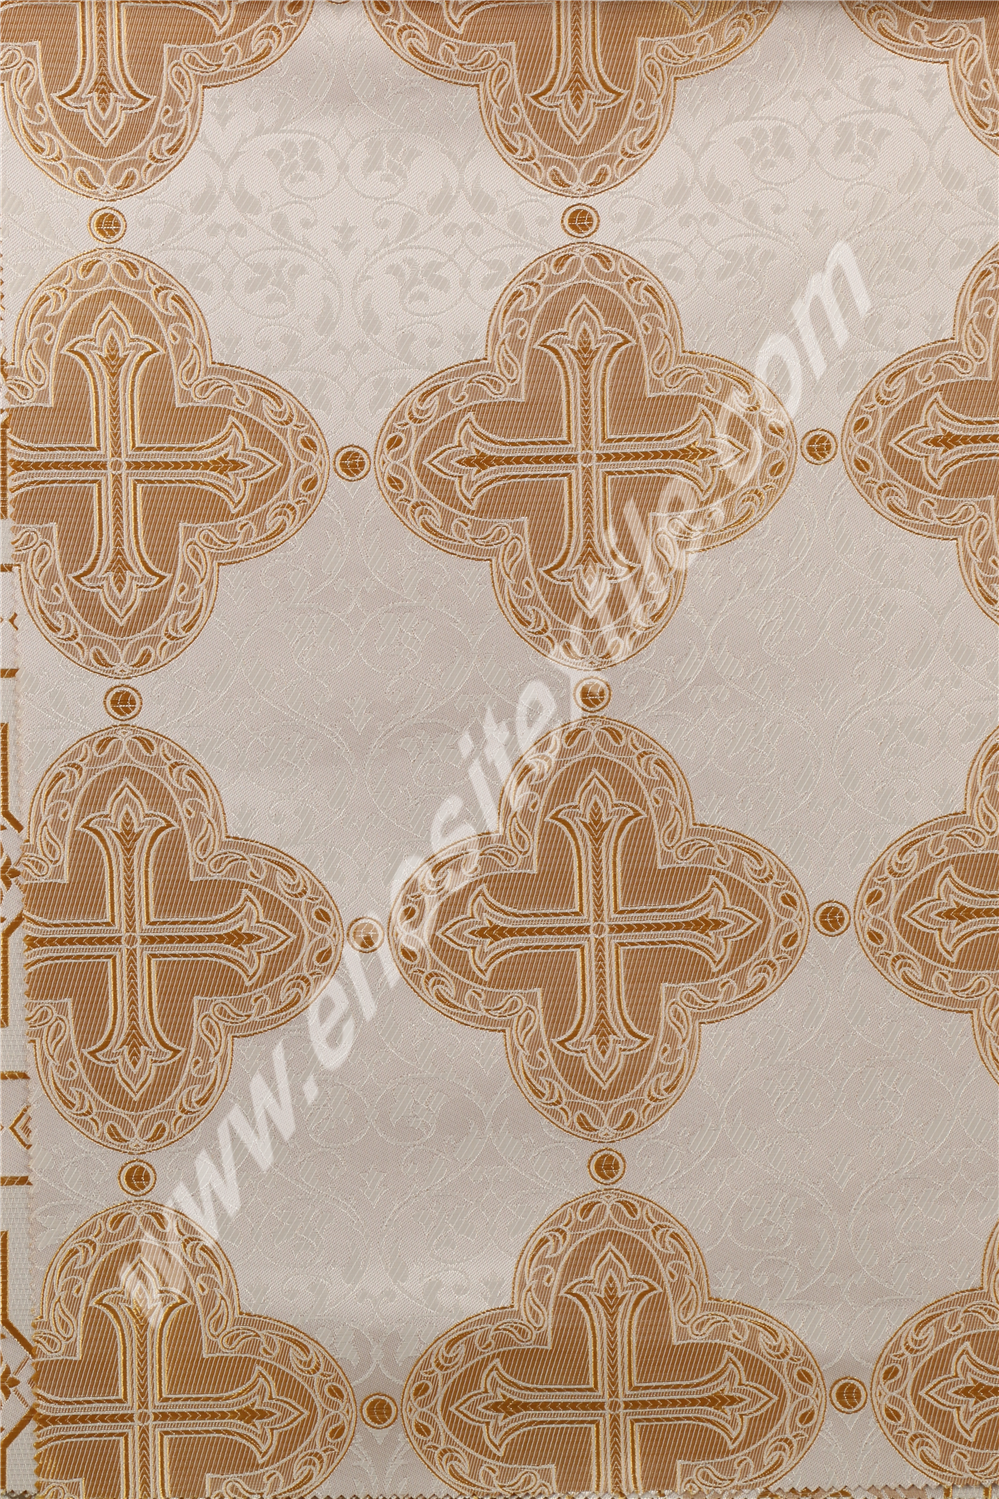 KL-050 White-Gold Brocade Fabrics